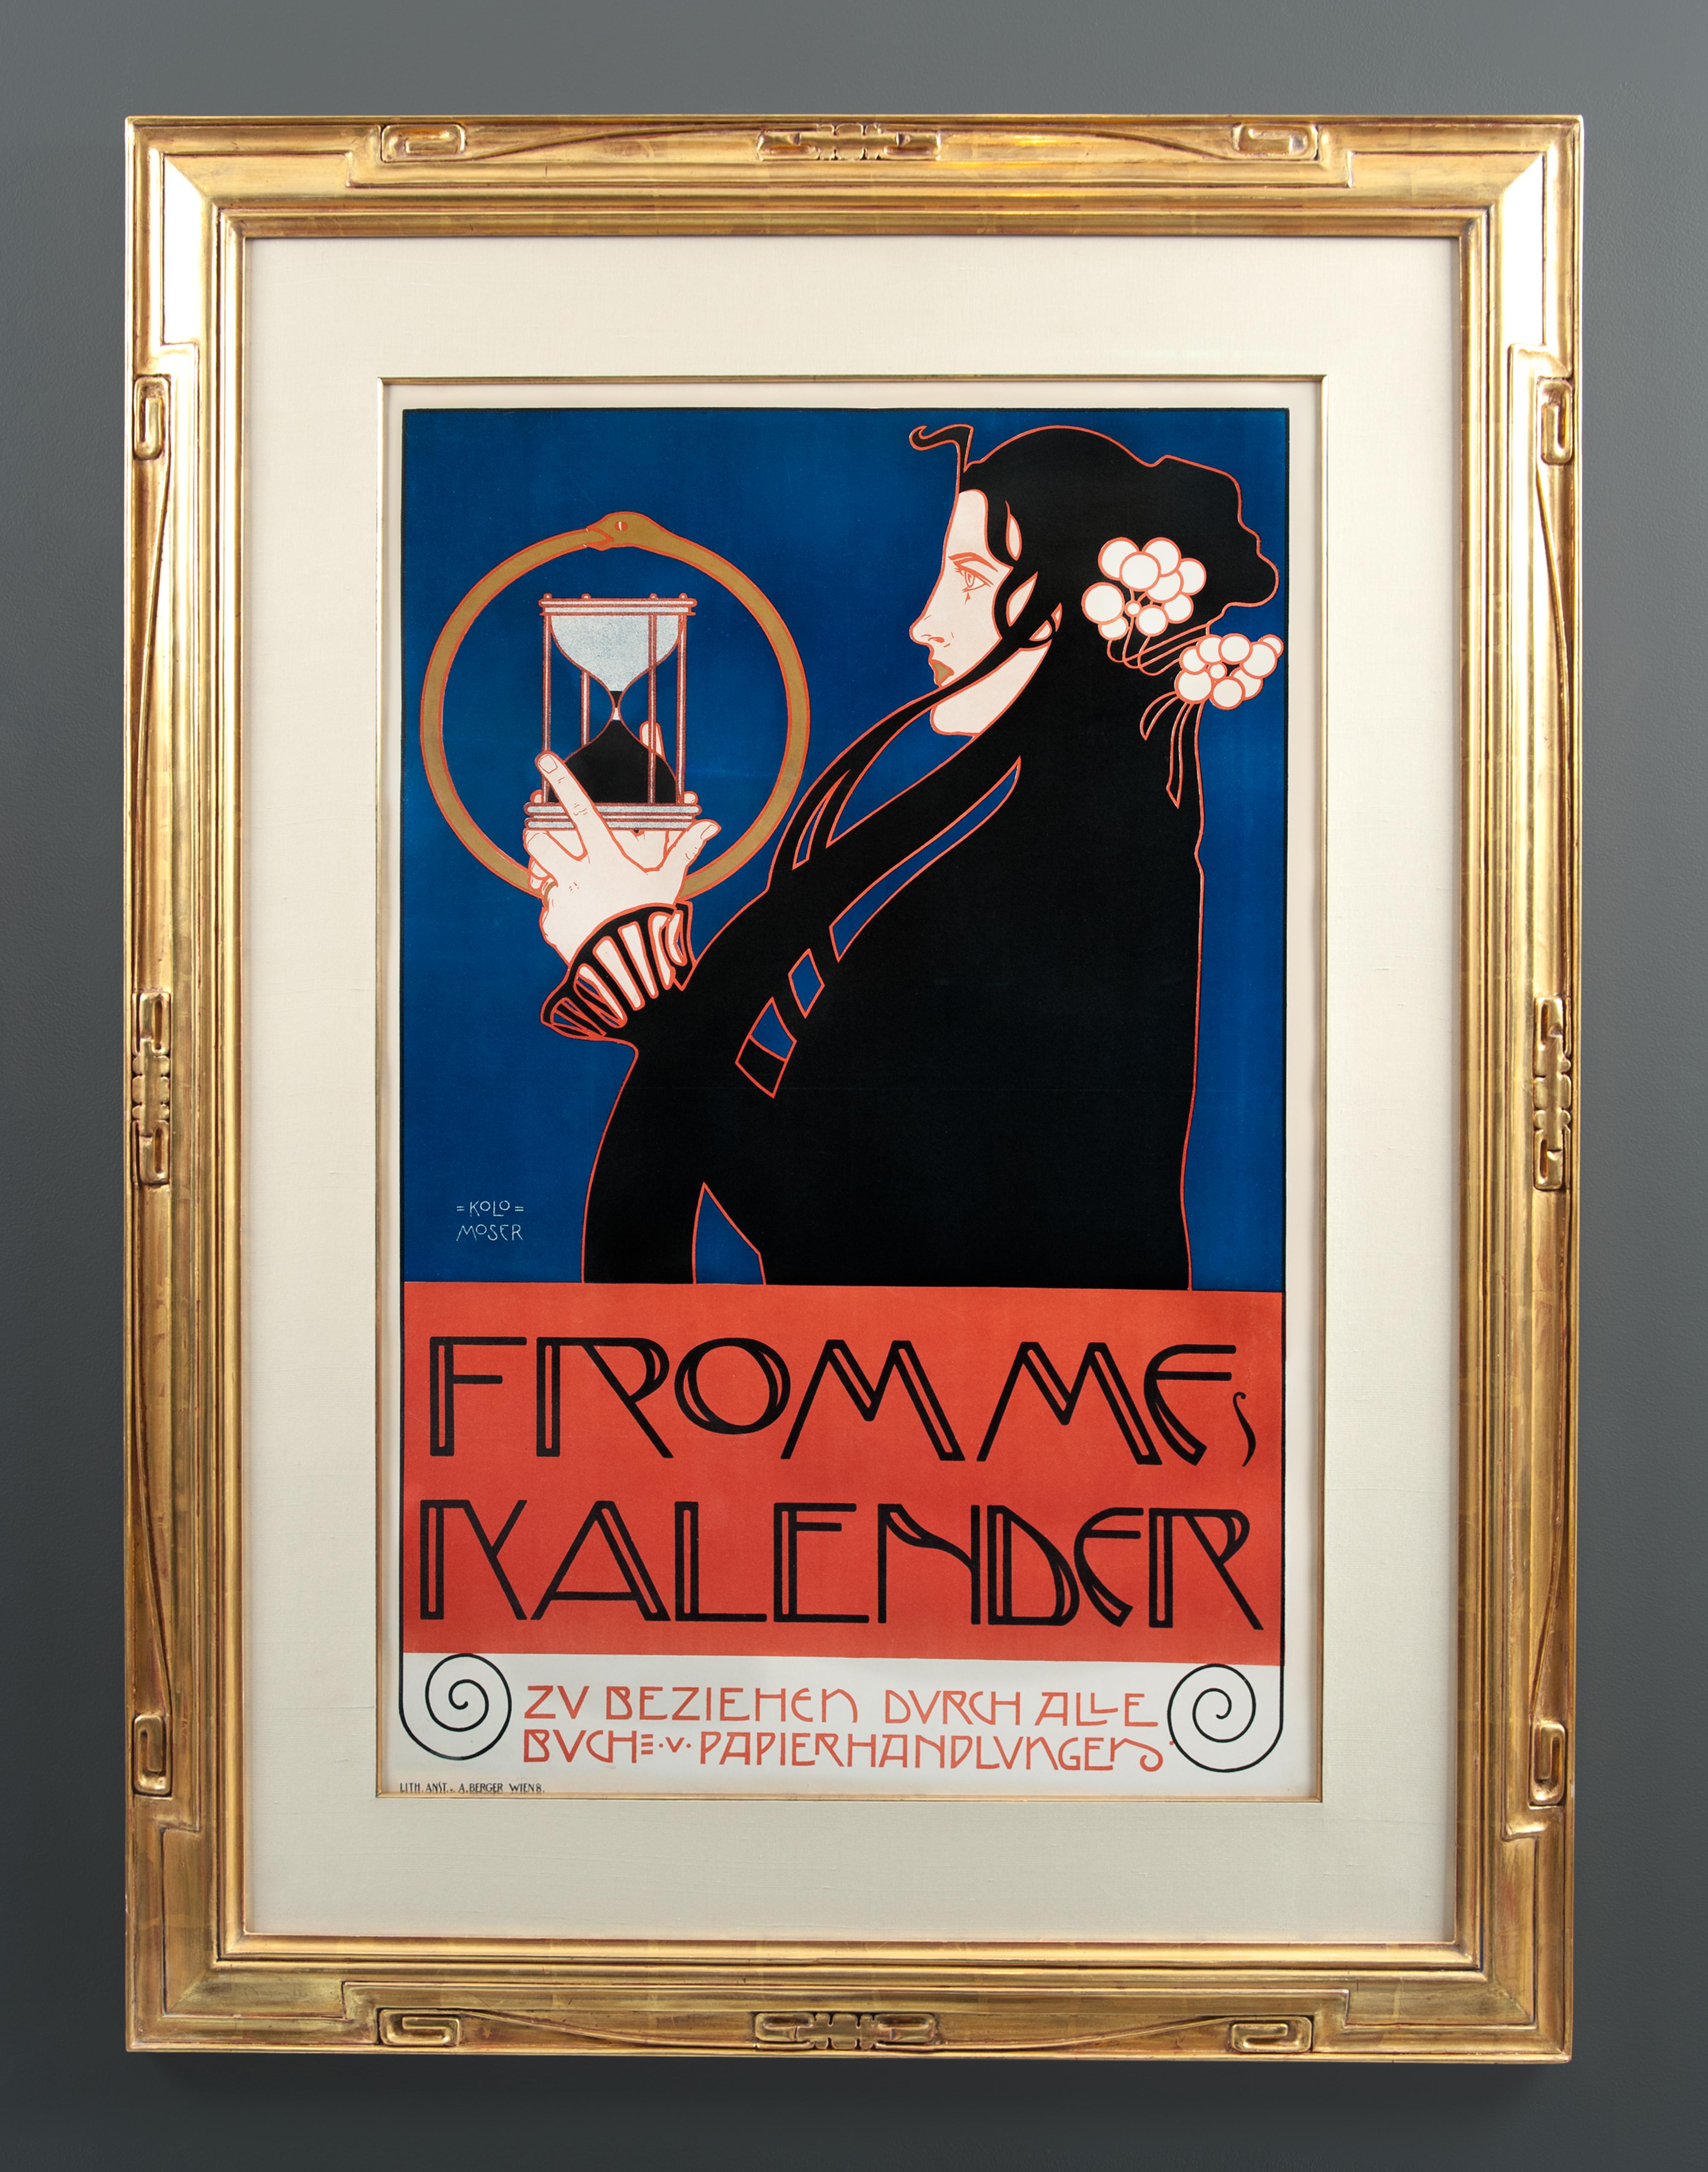 Fromme's Kalender Art Nouveau Lithograph Poster Koloman Moser Vienna Secession For Sale 1